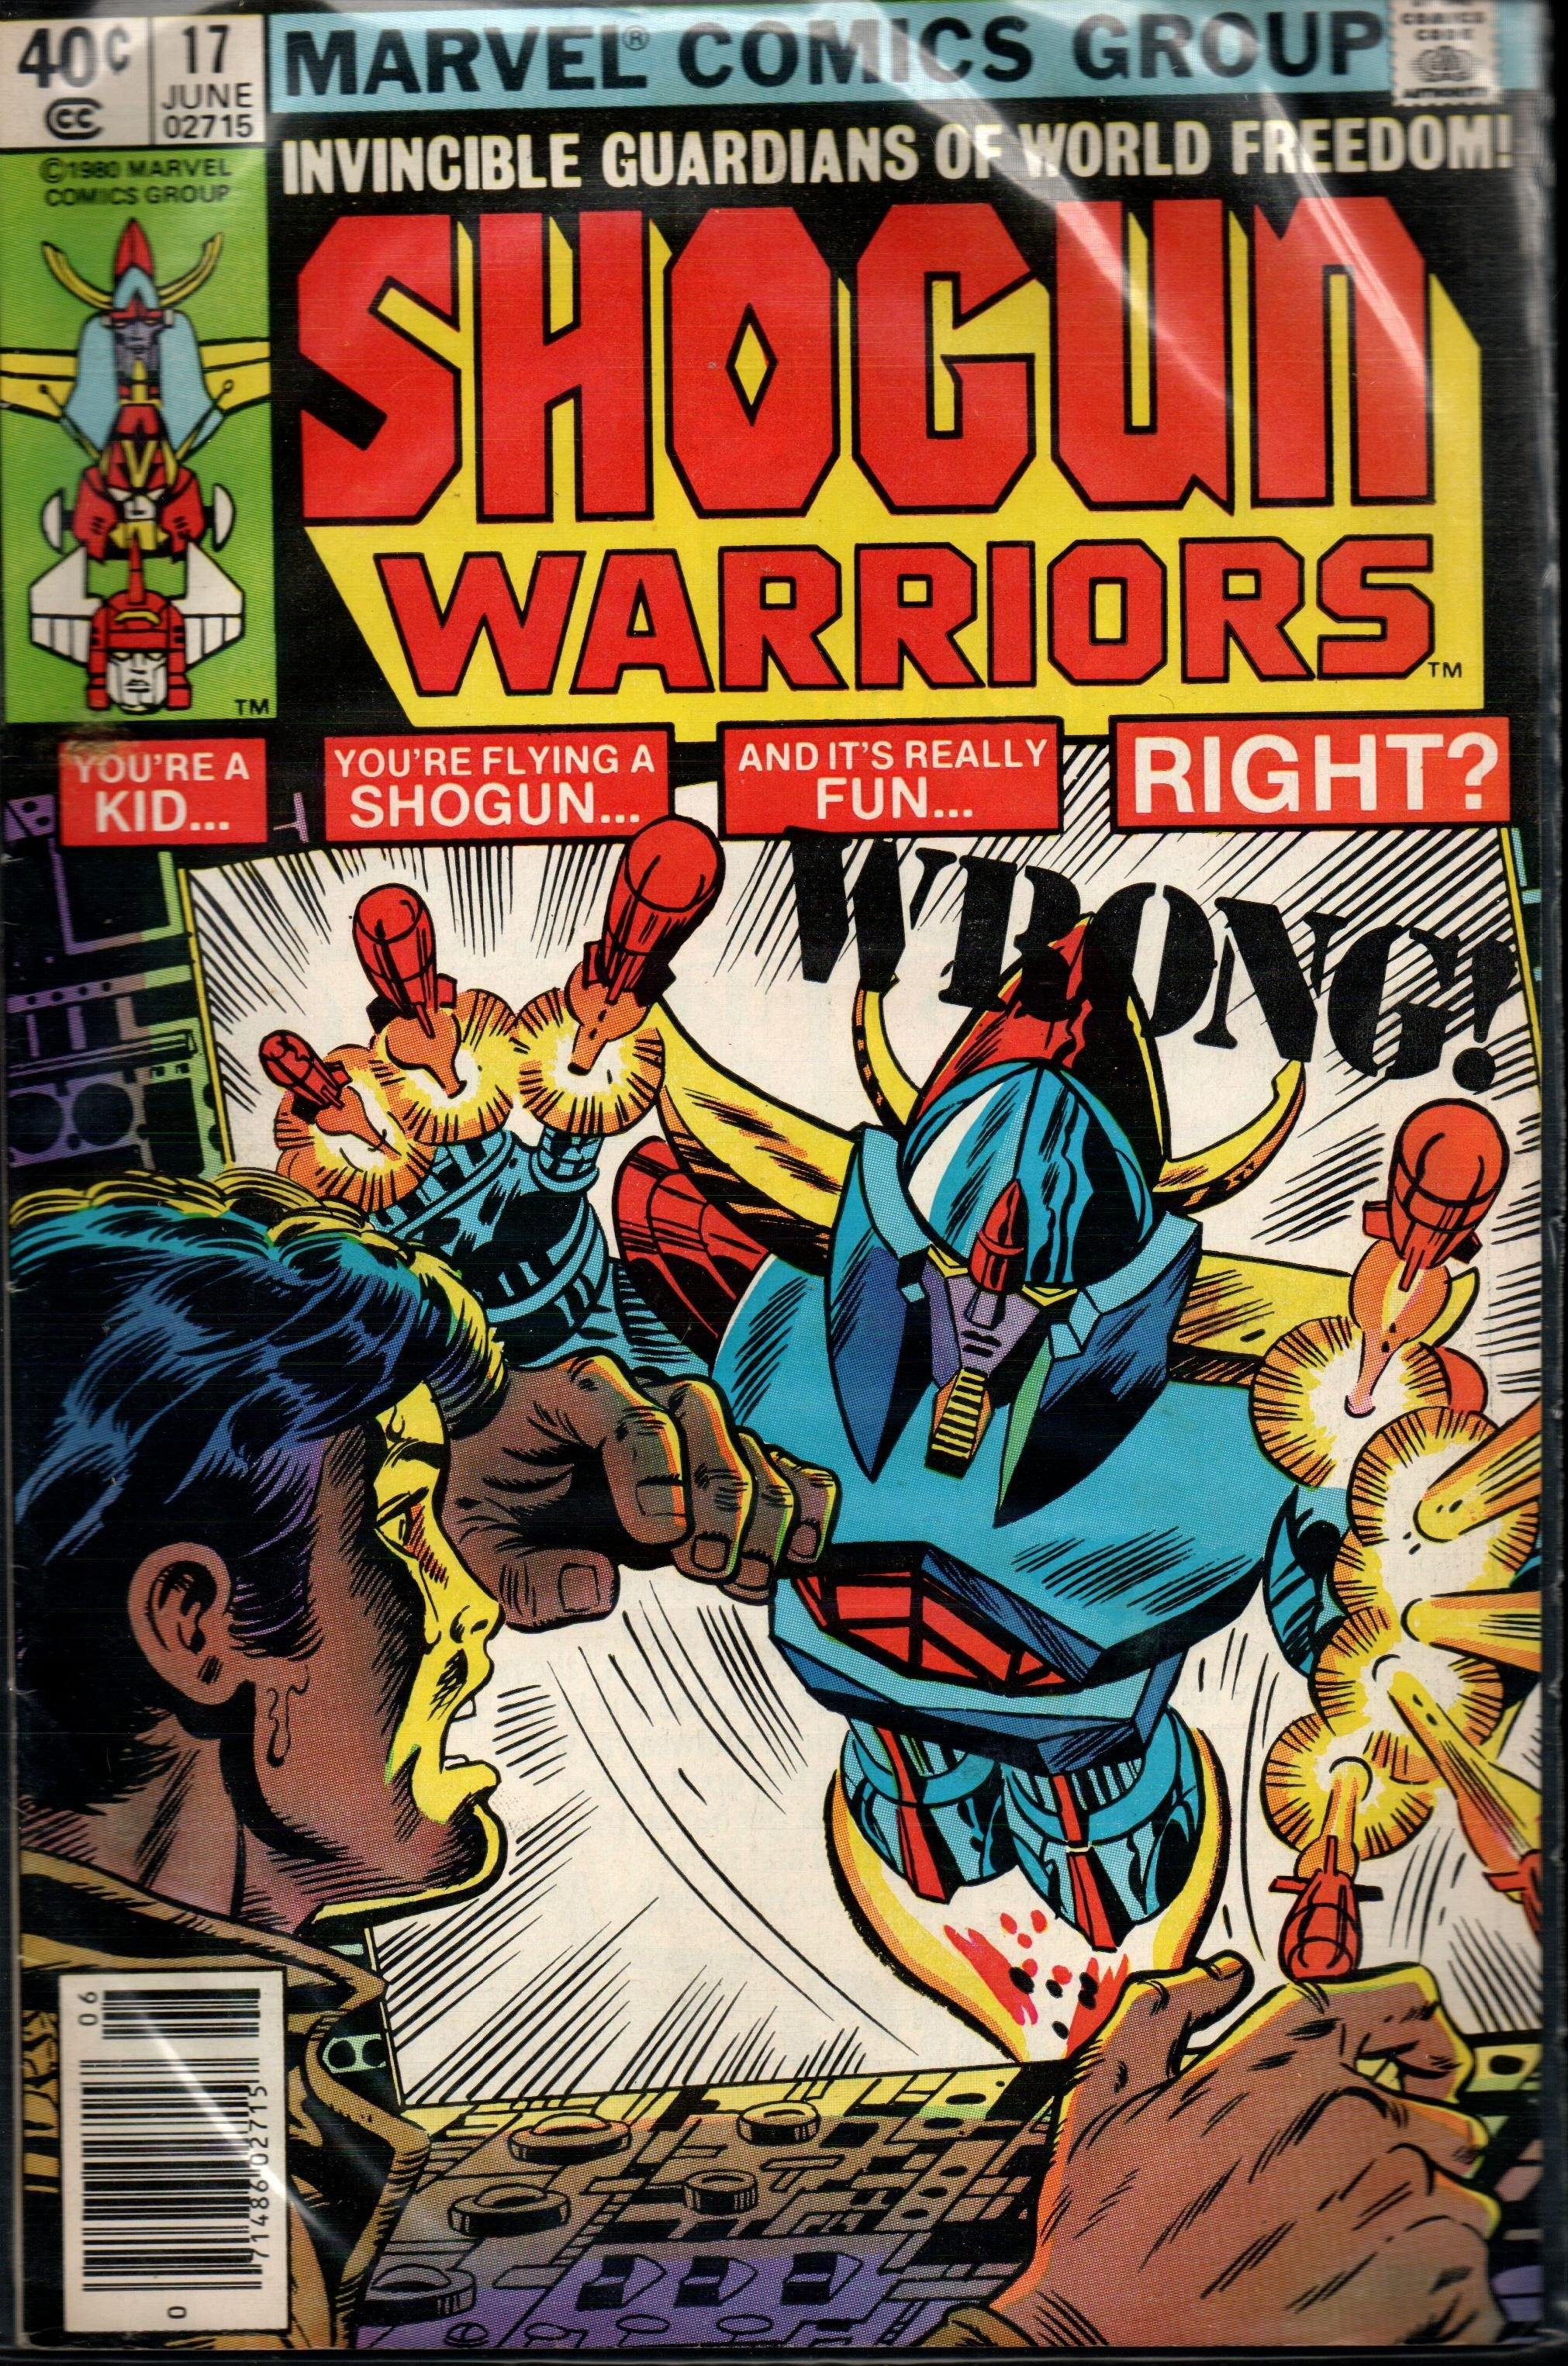 SHOGUN WARRIORS #17 JAN 1980